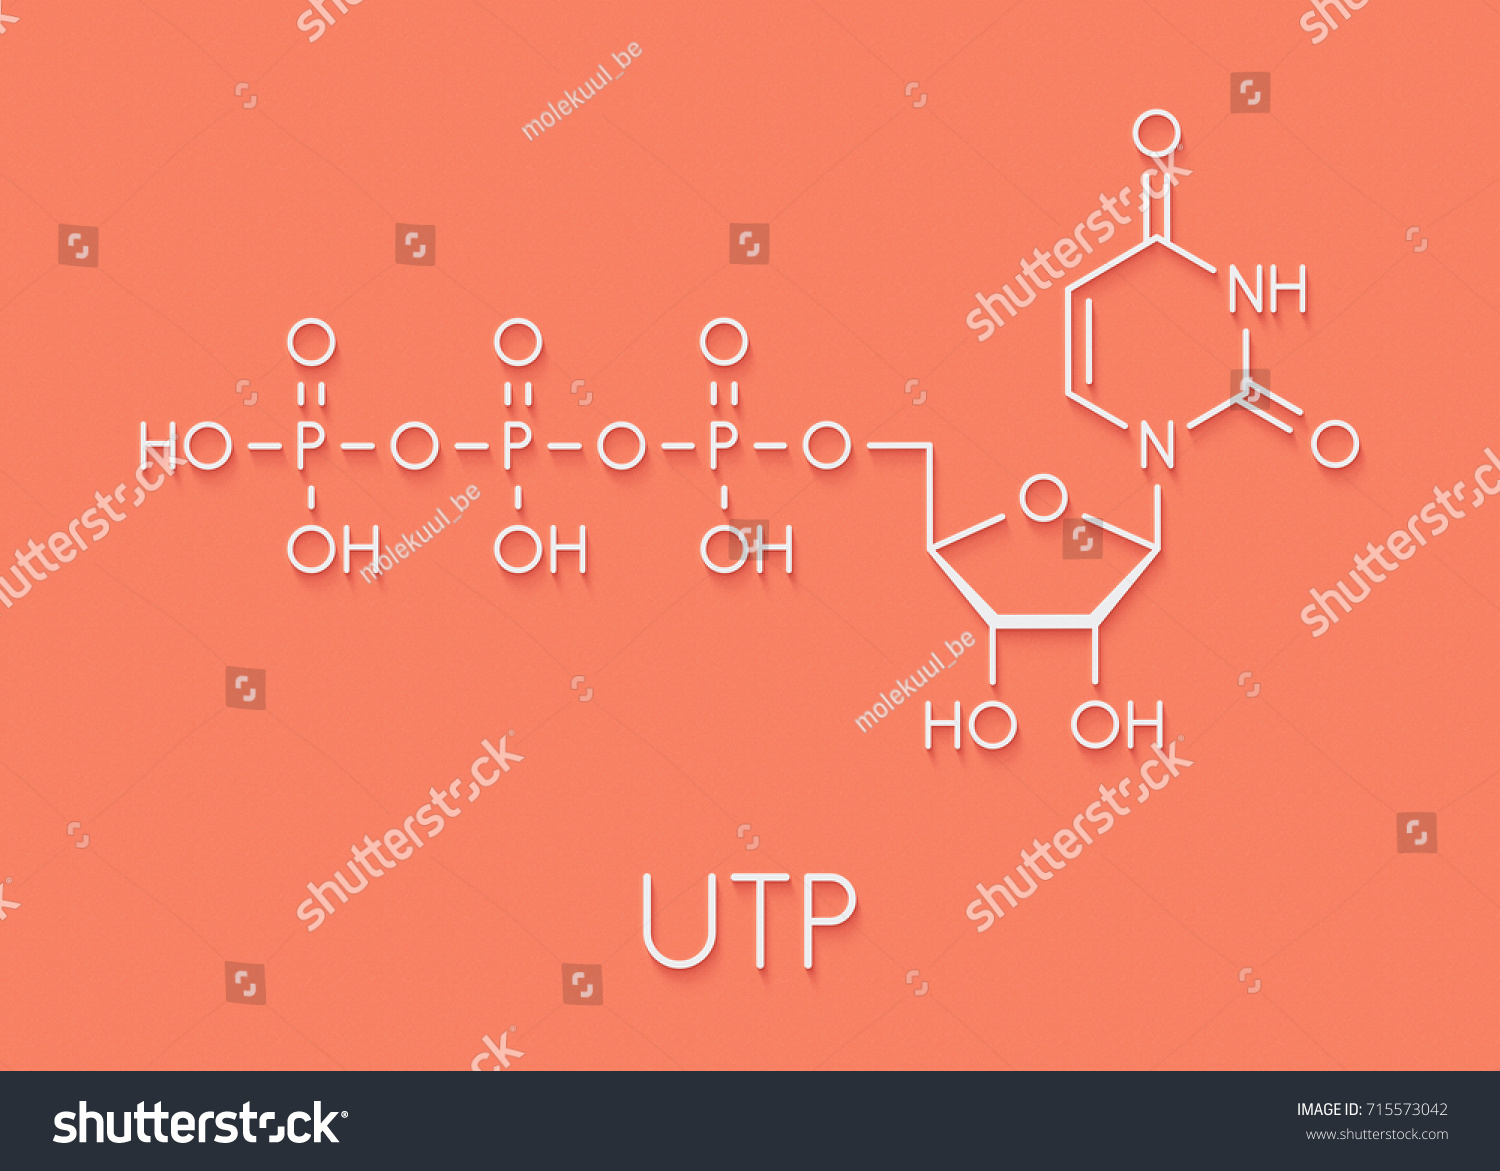 Uridine Triphosphate Utp Nucleotide Molecule Royalty Free Stock